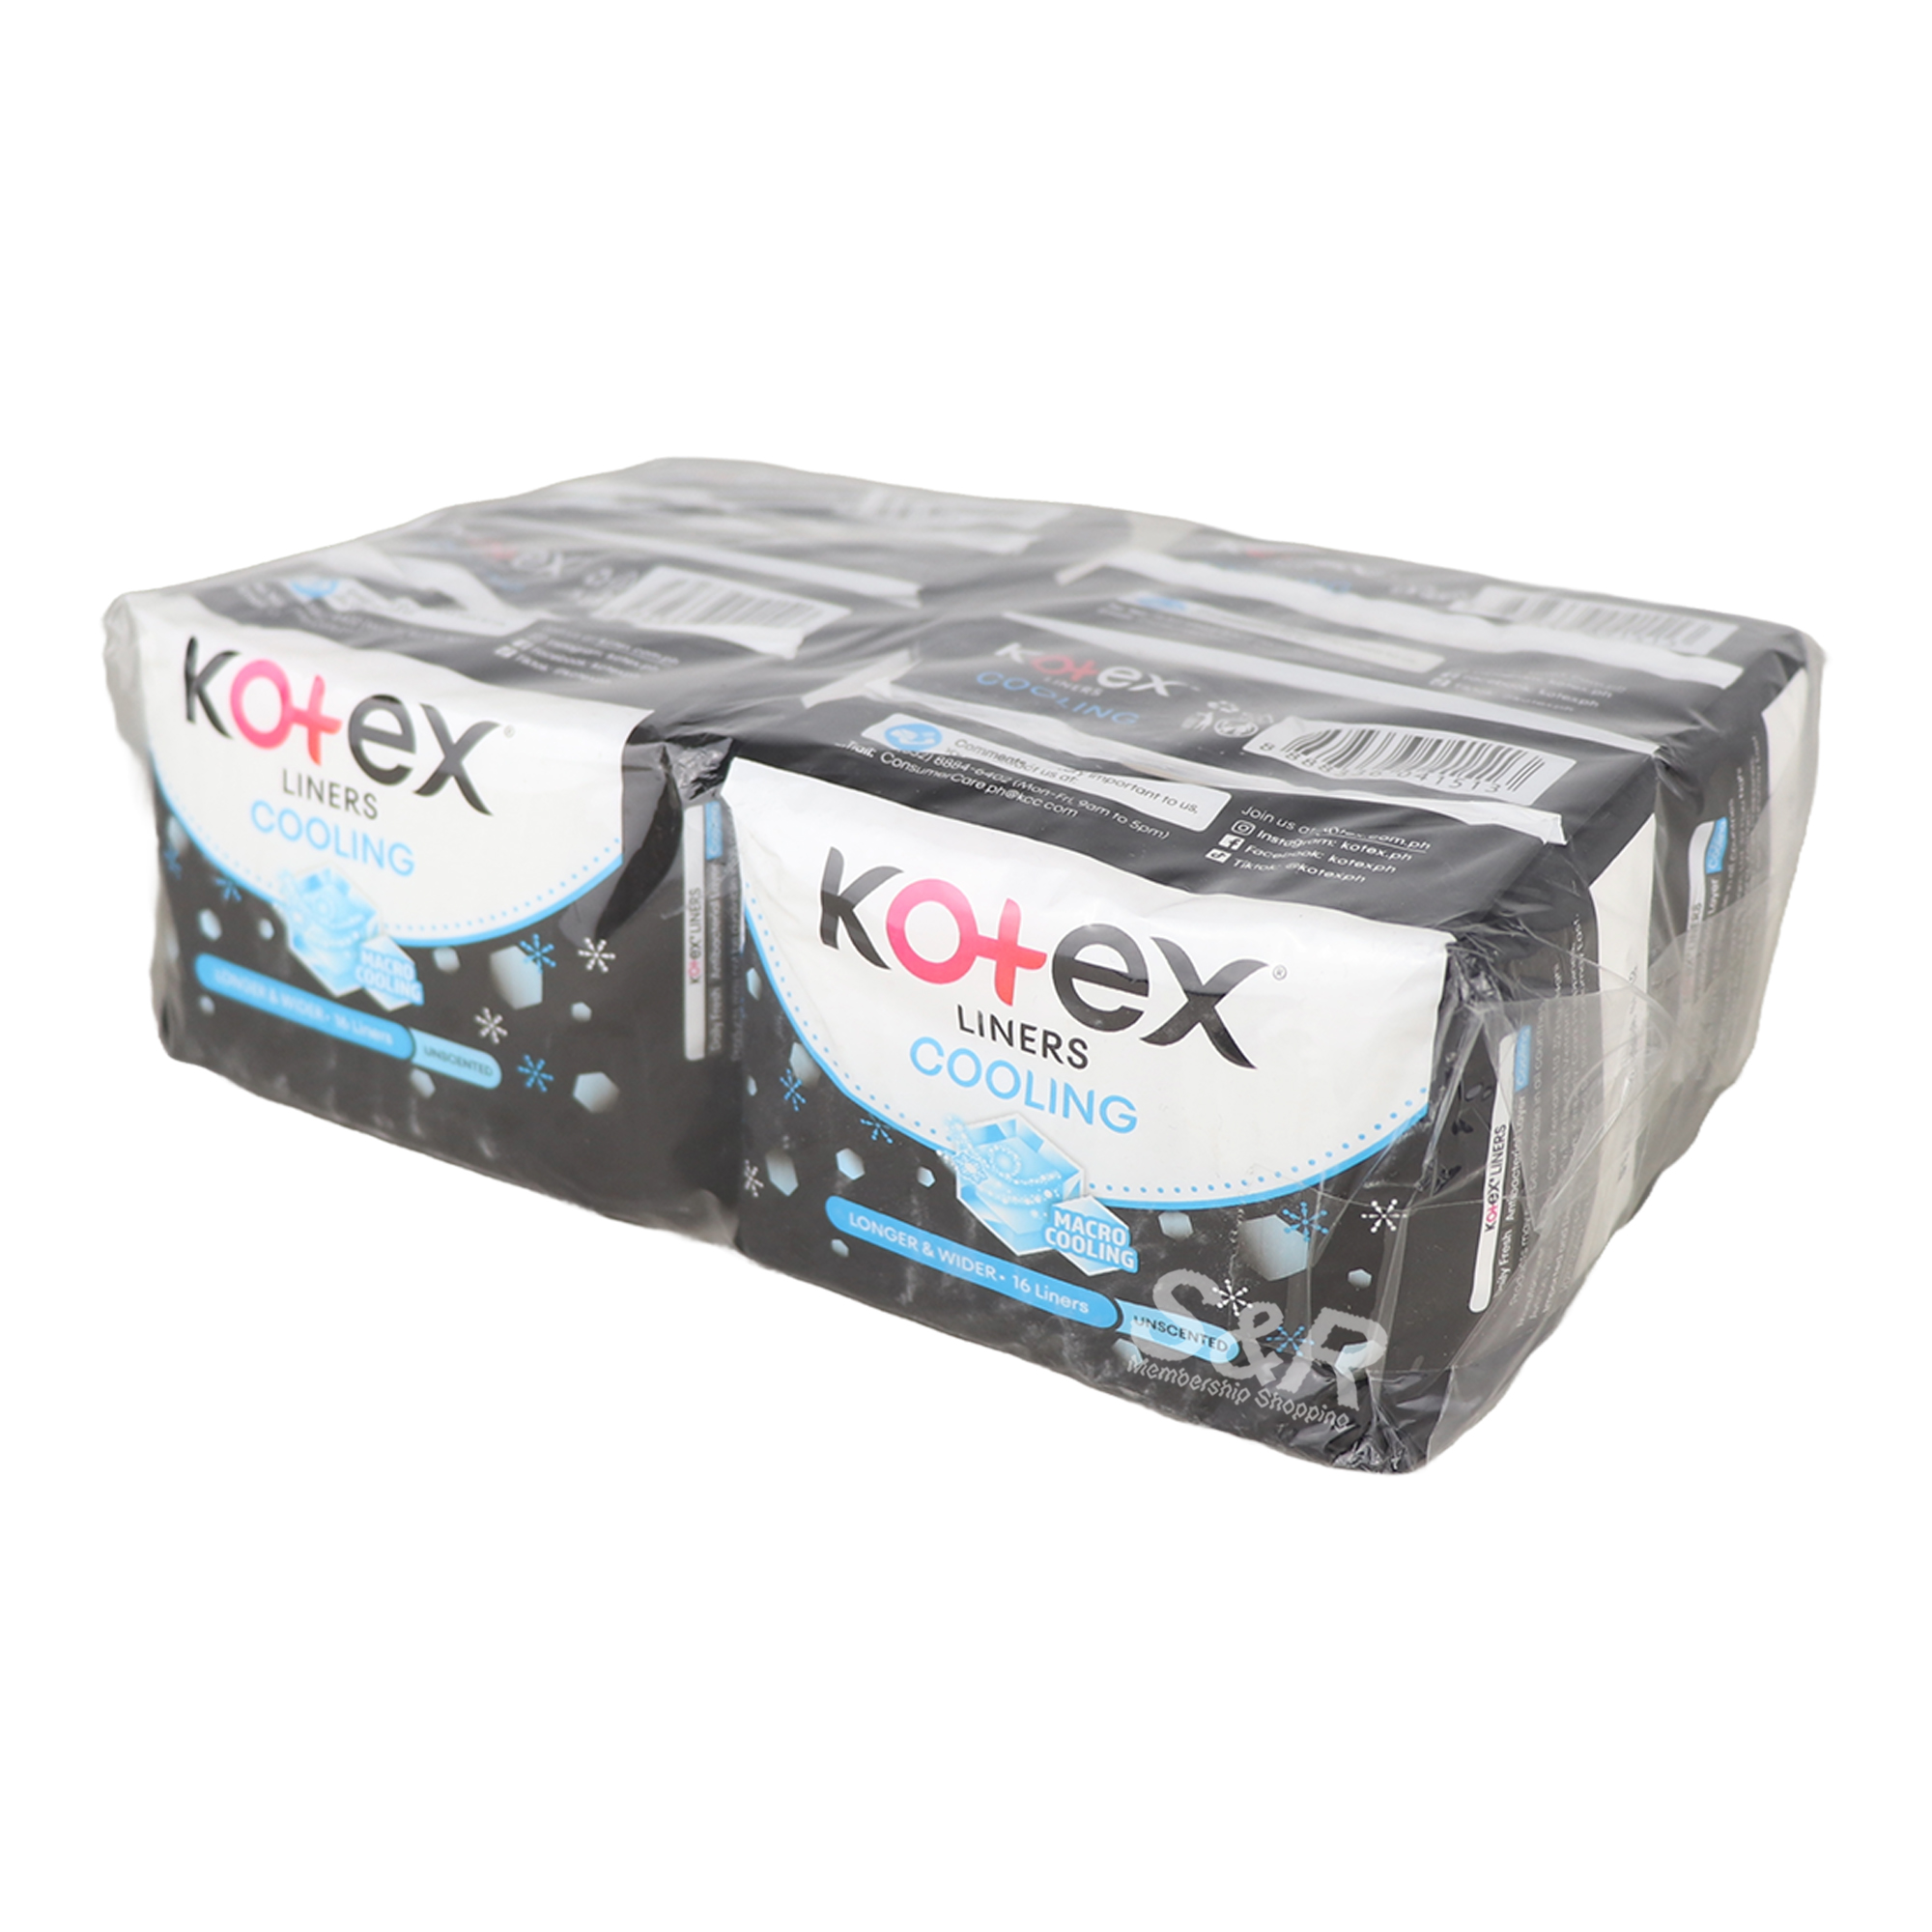 Kotex Cooling Liners 4pack x 16pcs